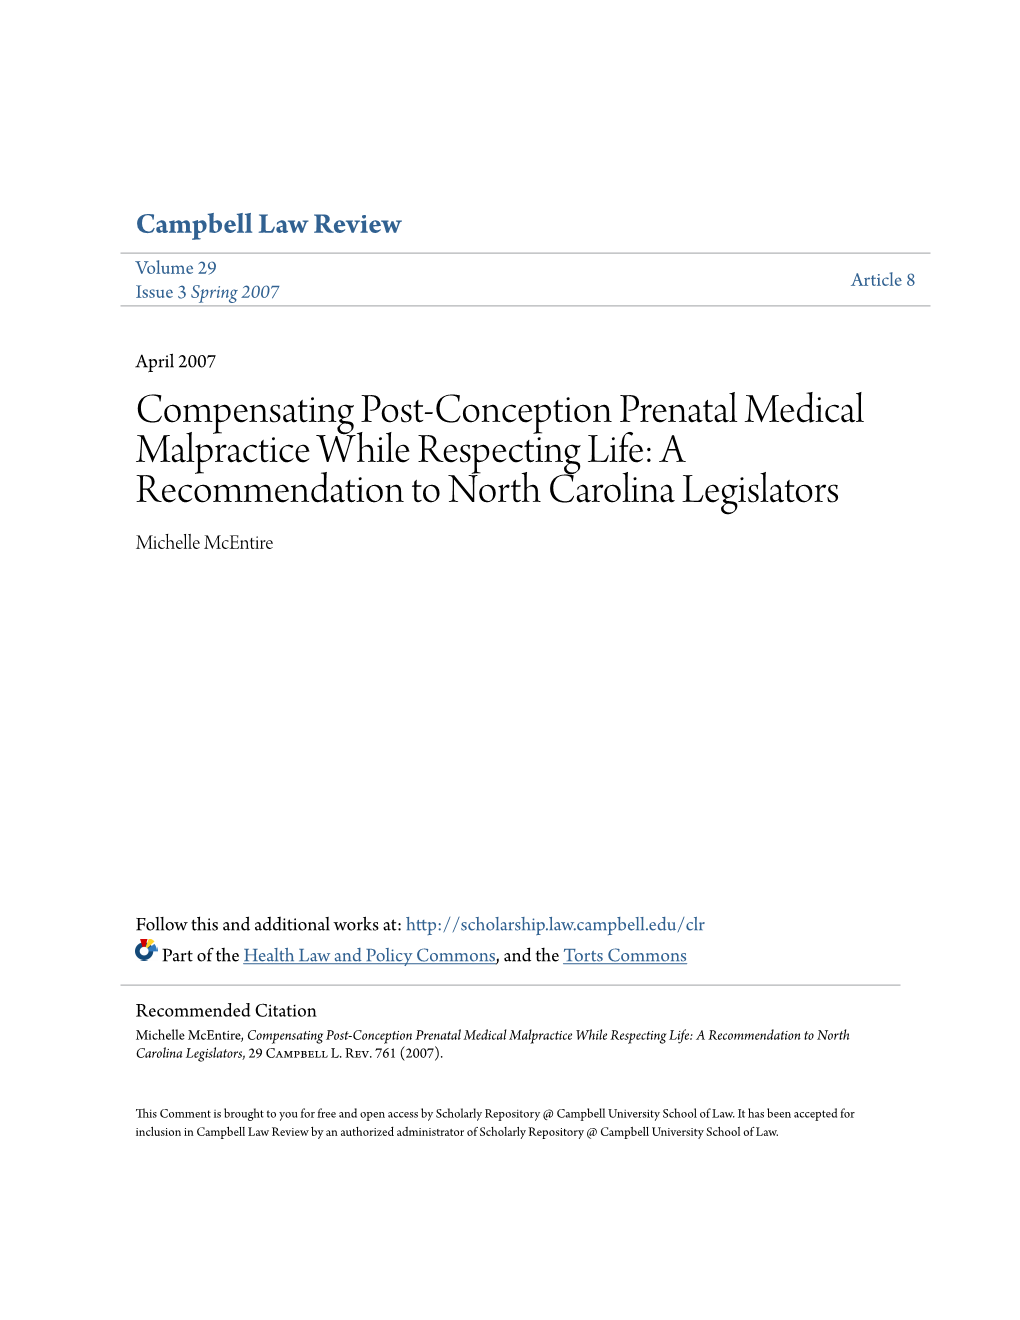 Compensating Post-Conception Prenatal Medical Malpractice While Respecting Life: a Recommendation to North Carolina Legislators Michelle Mcentire